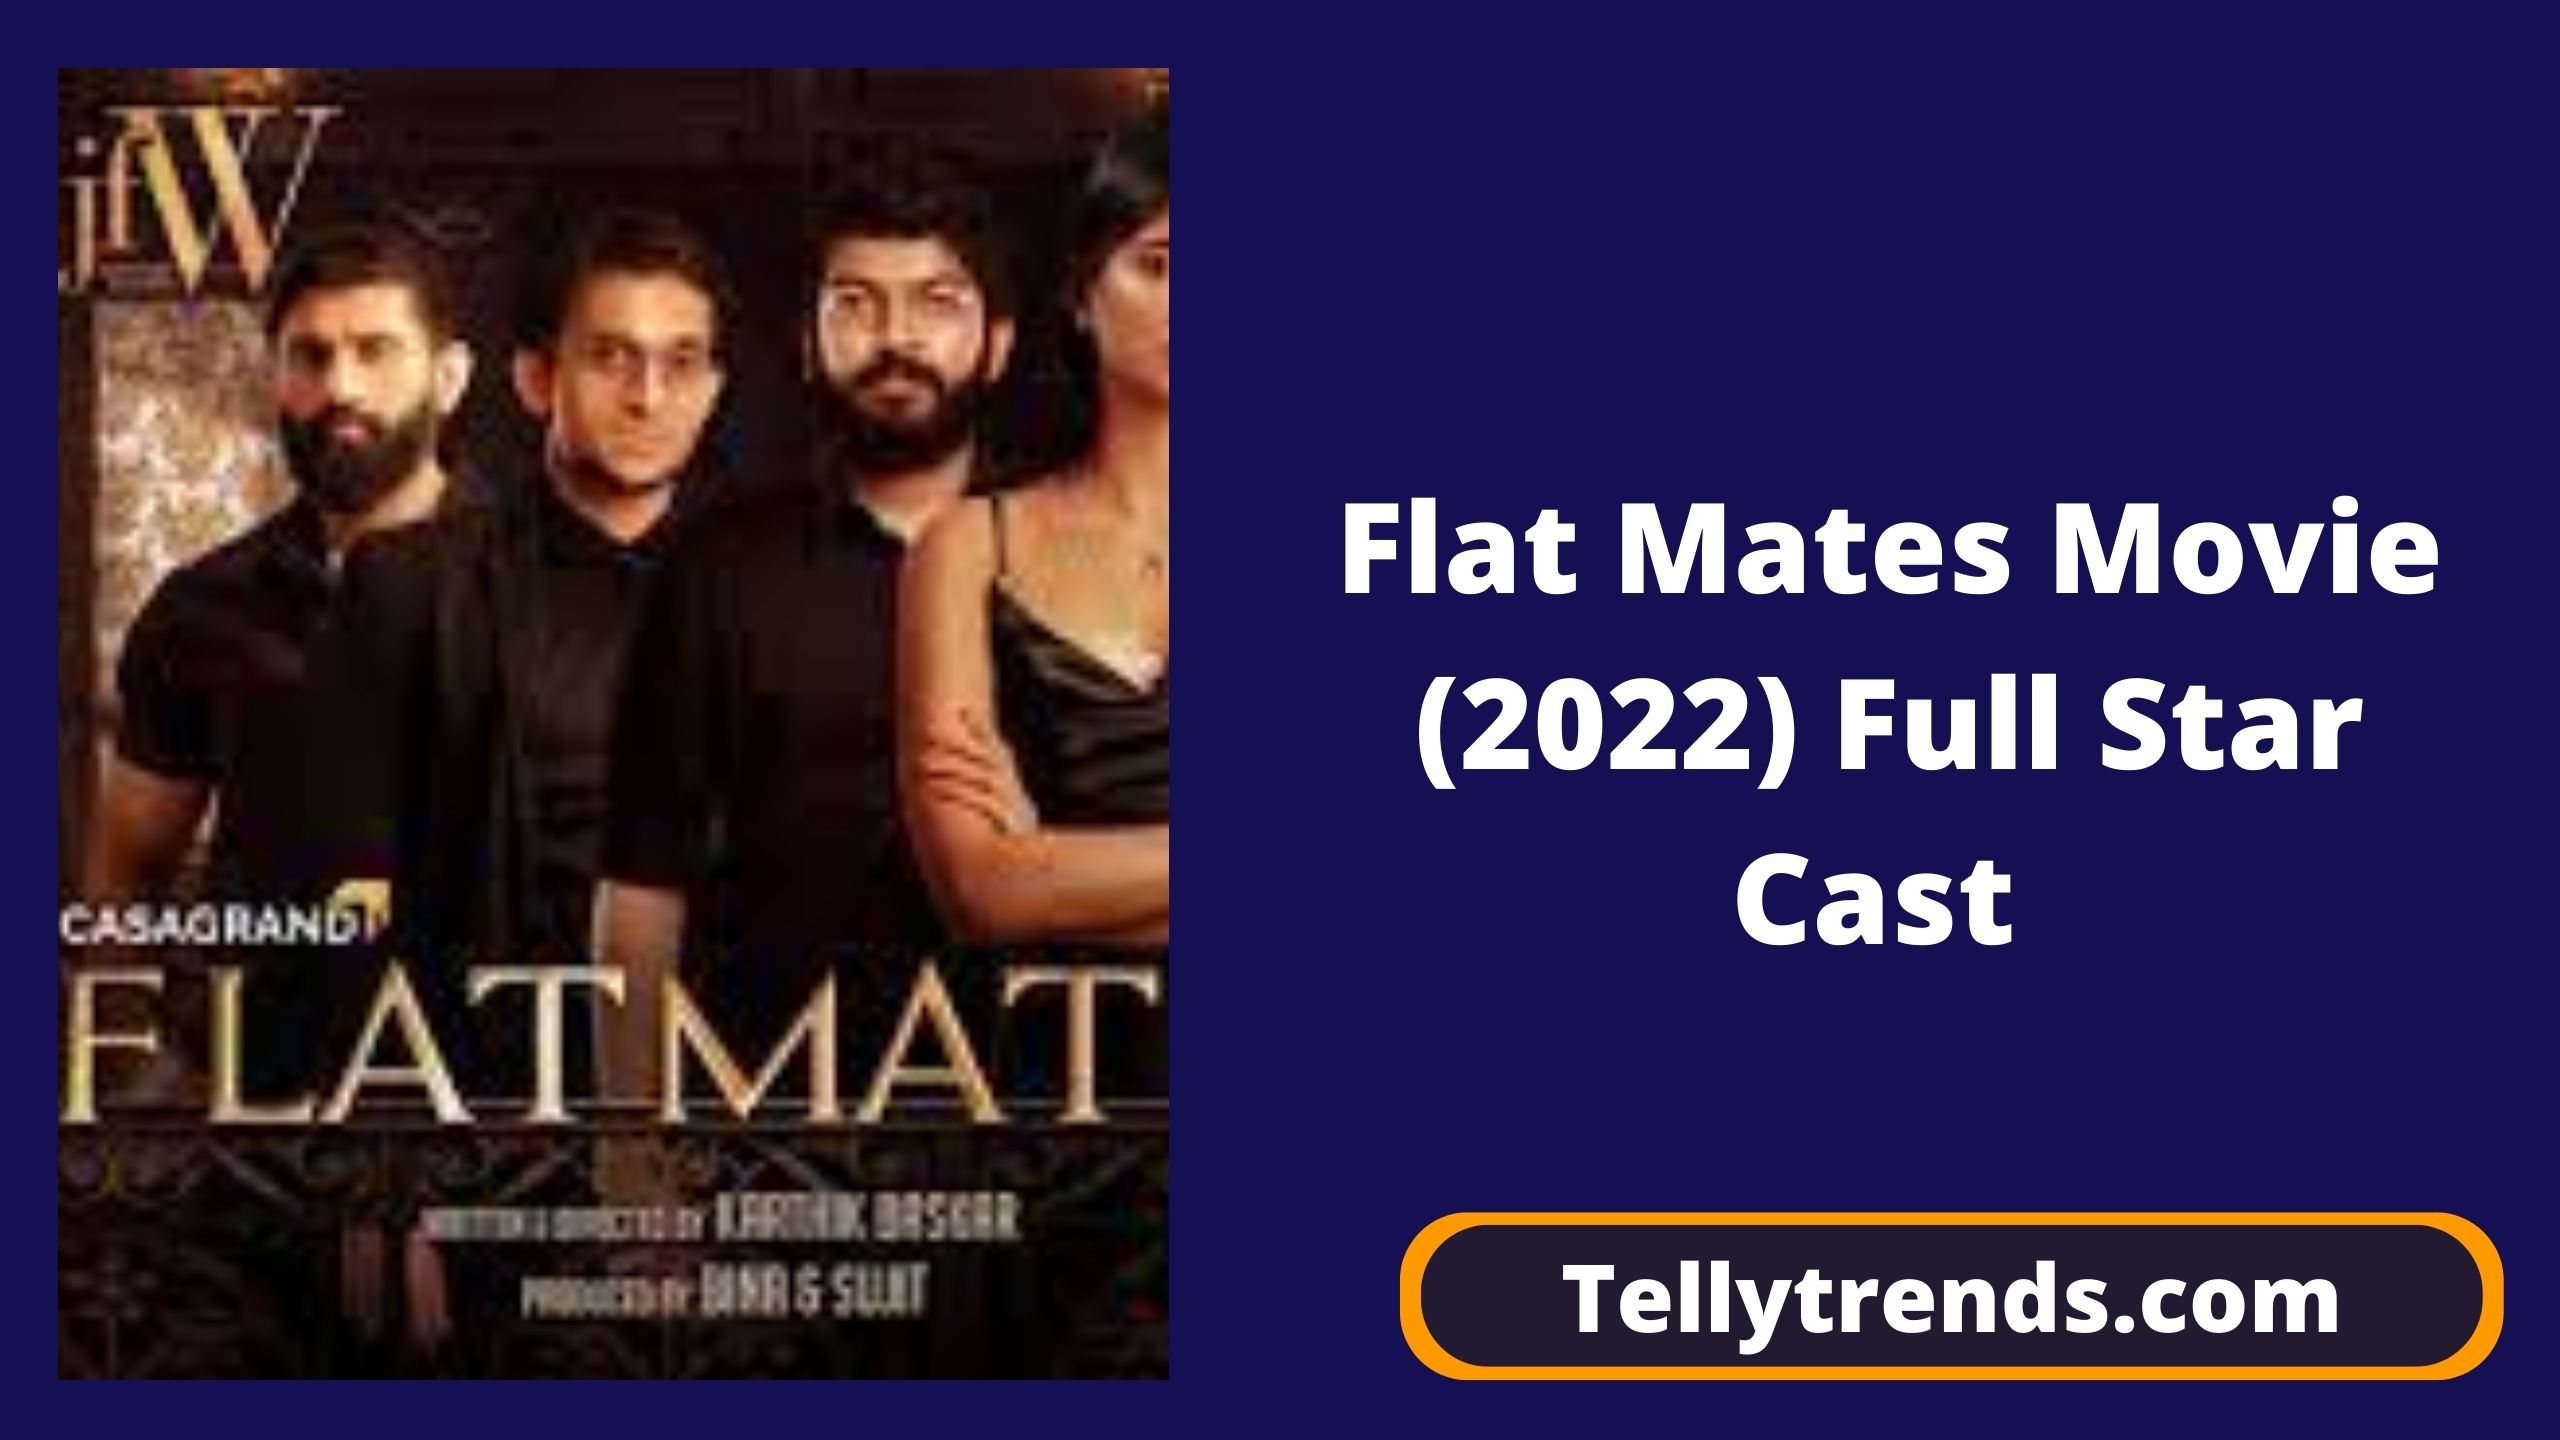 Flat Mates Movie (2022) Full